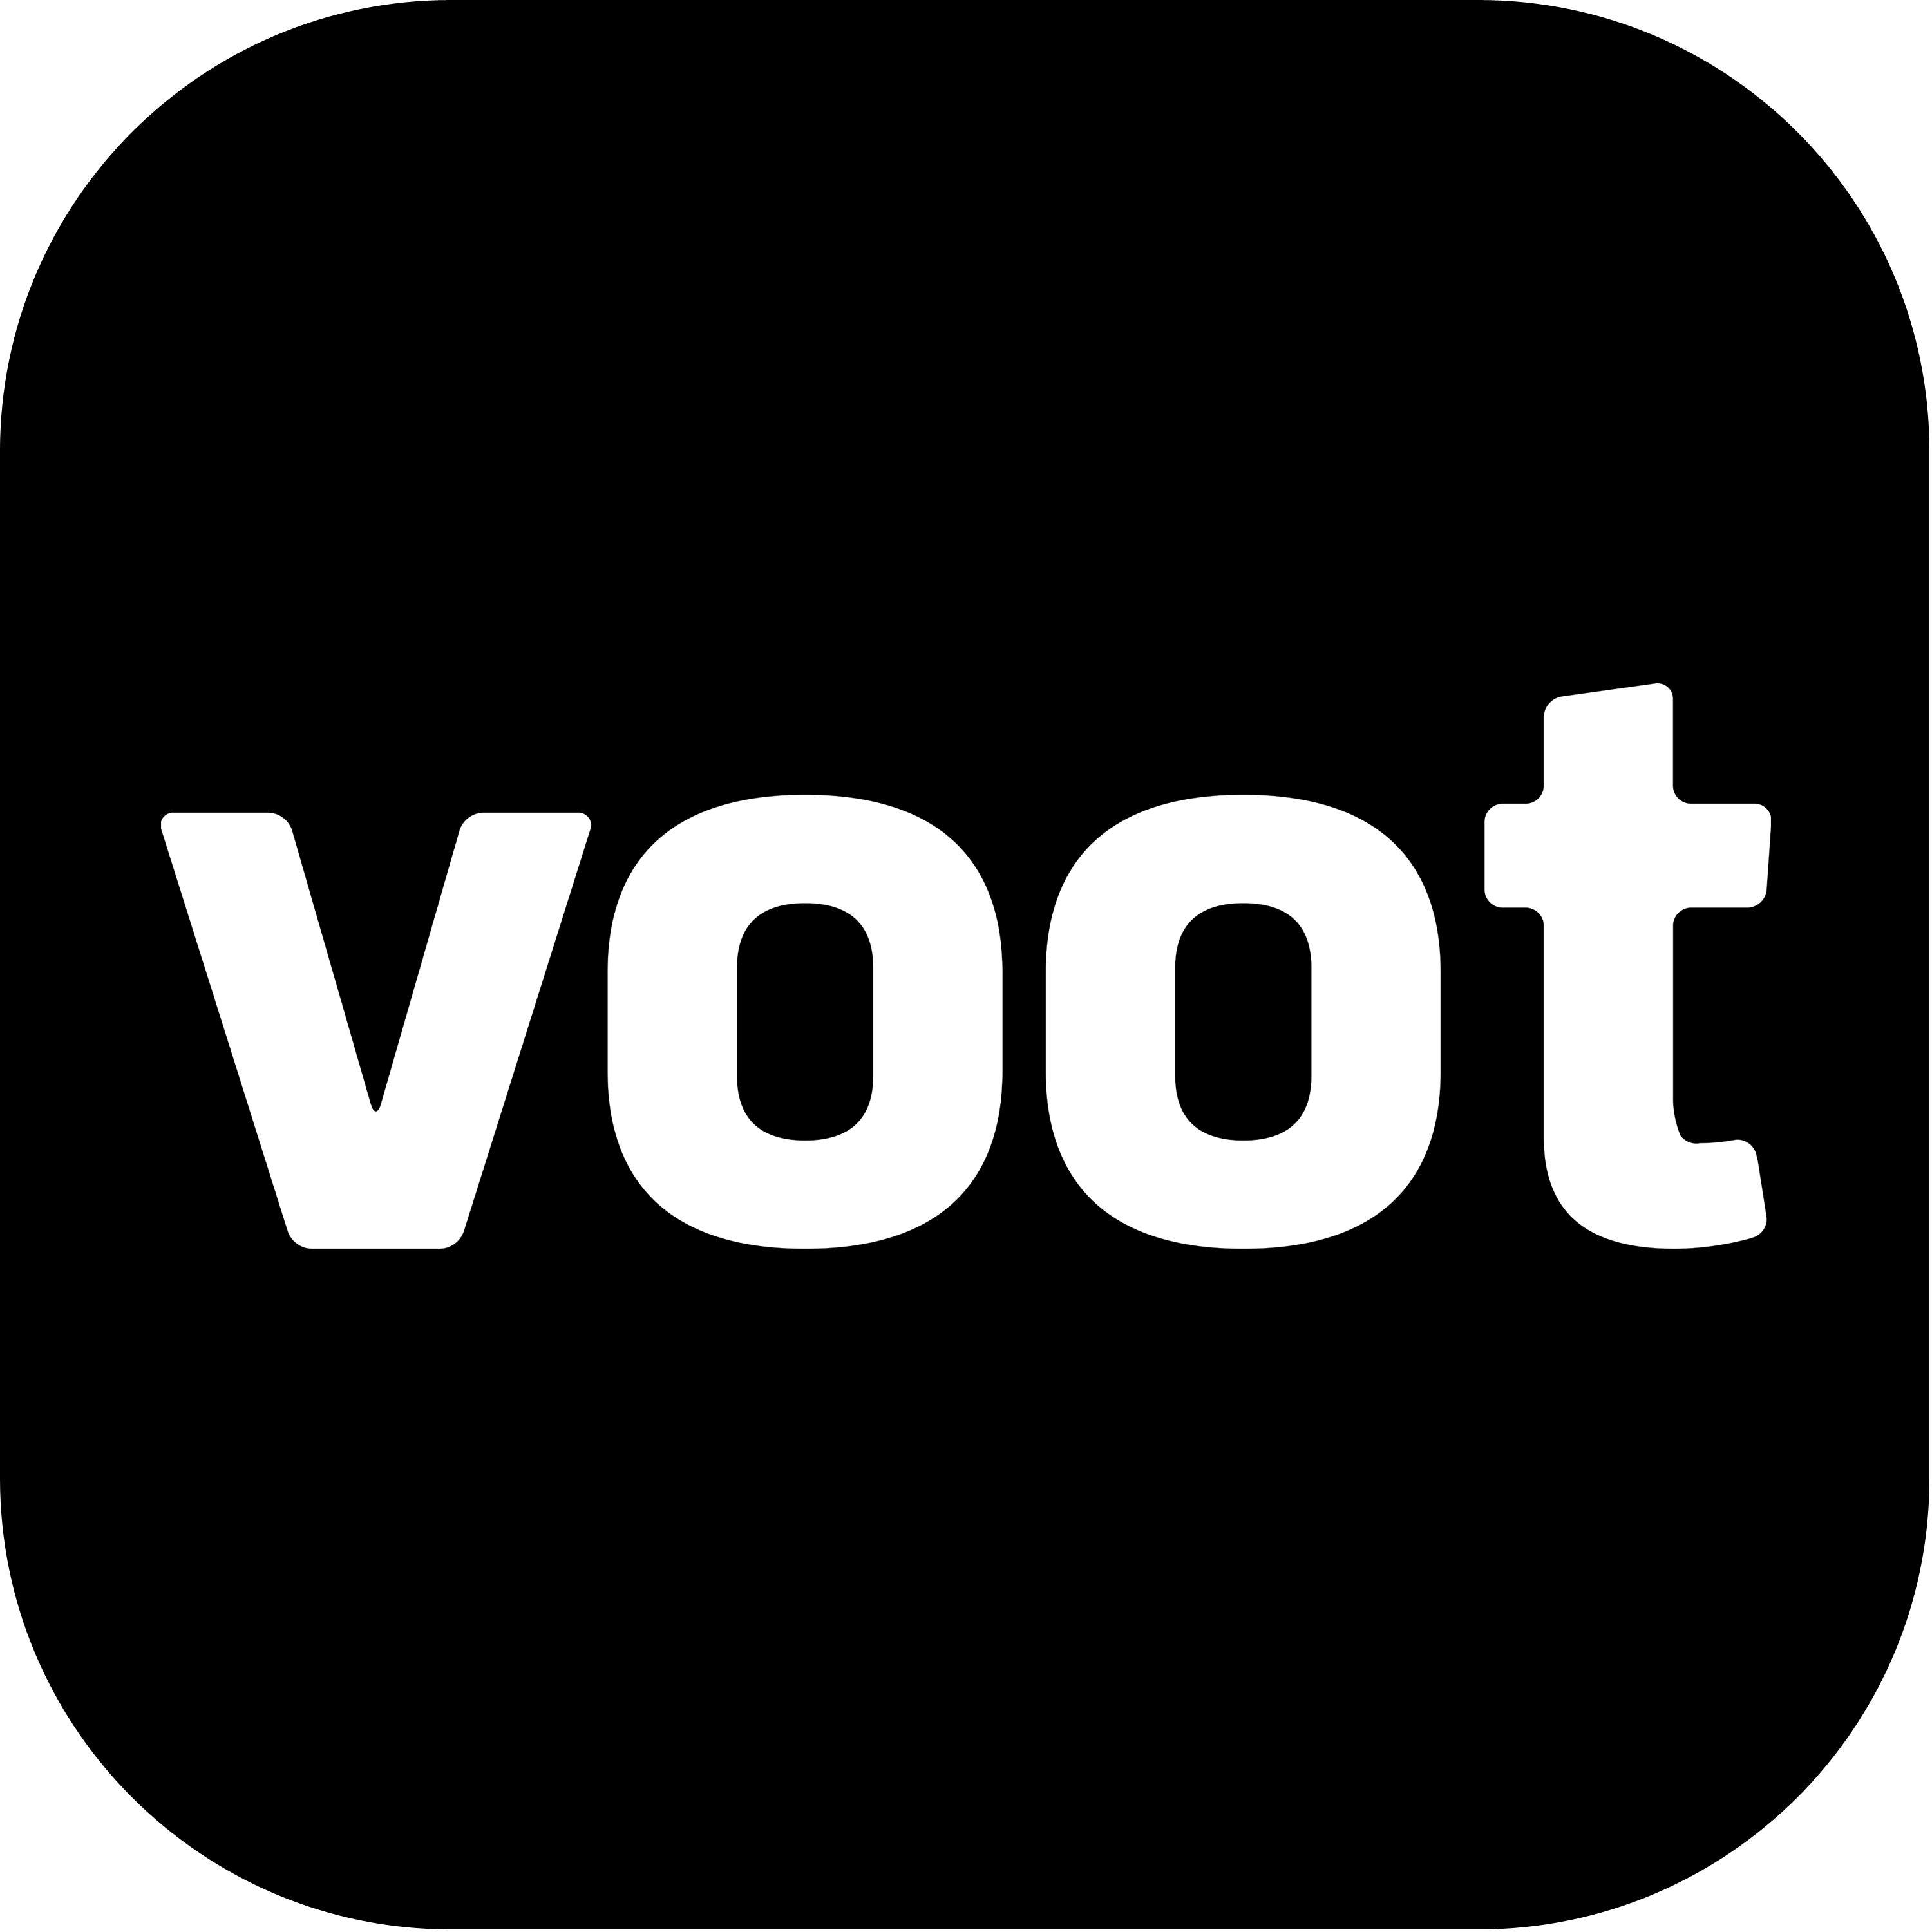 Voot Logo Transparent Photo